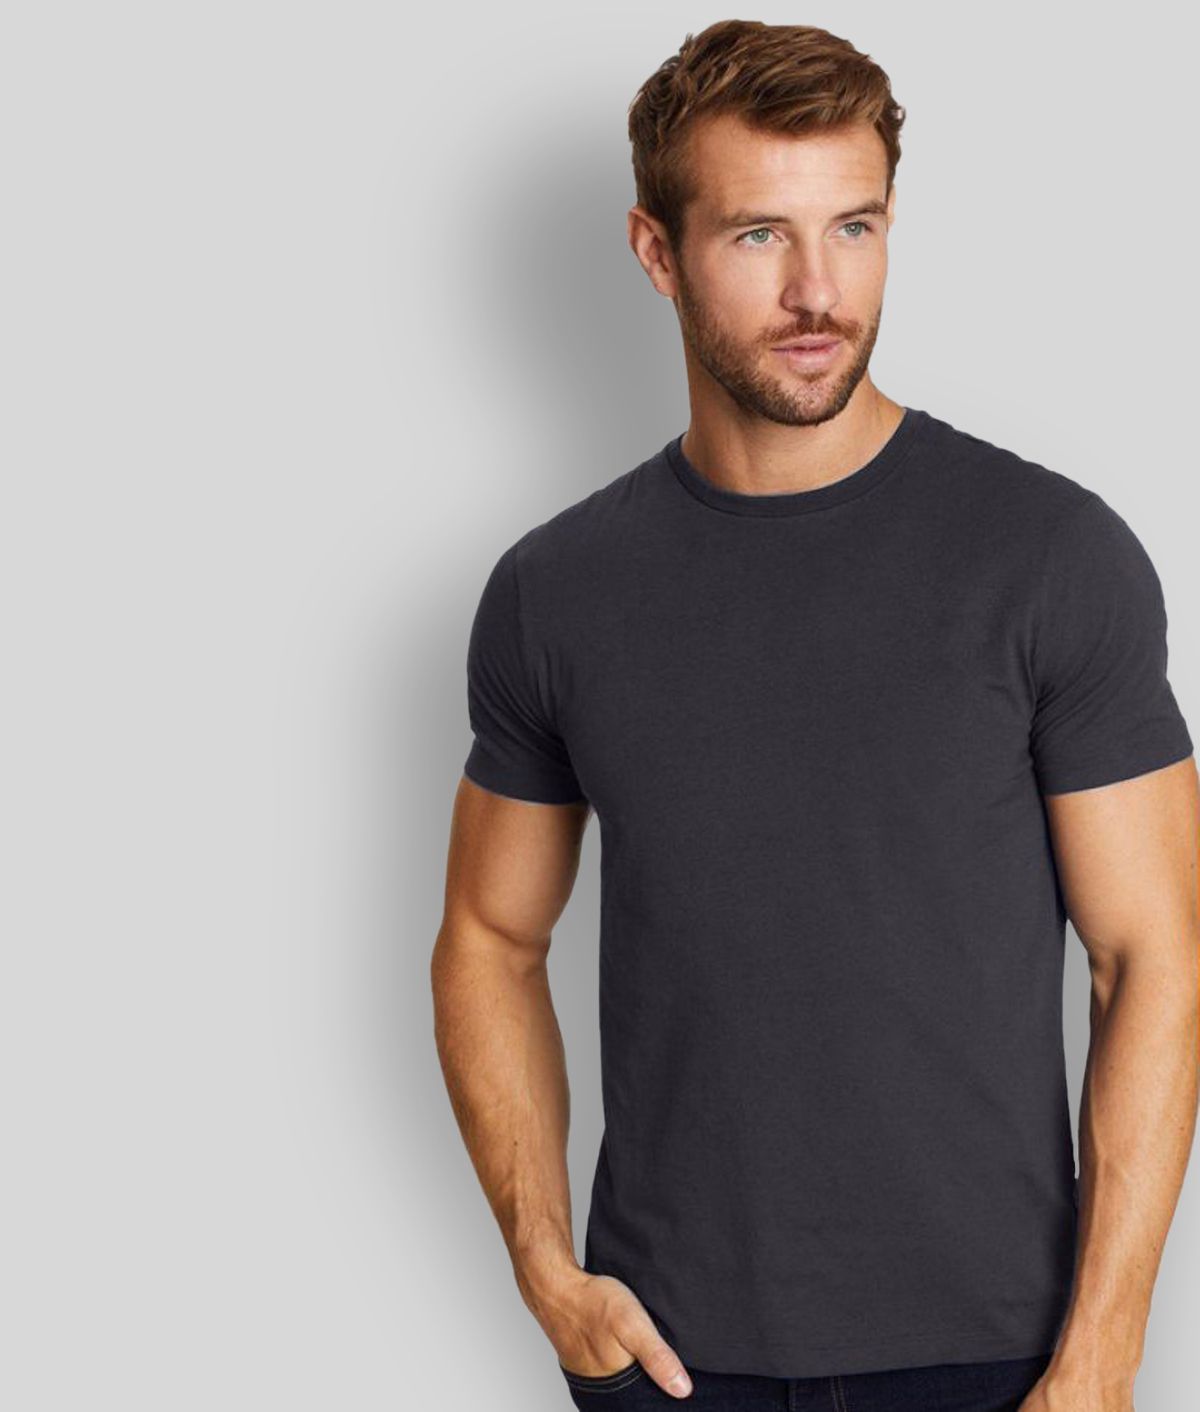     			ESPARTO - Grey Cotton Regular Fit Men's T-Shirt ( Pack of 1 )